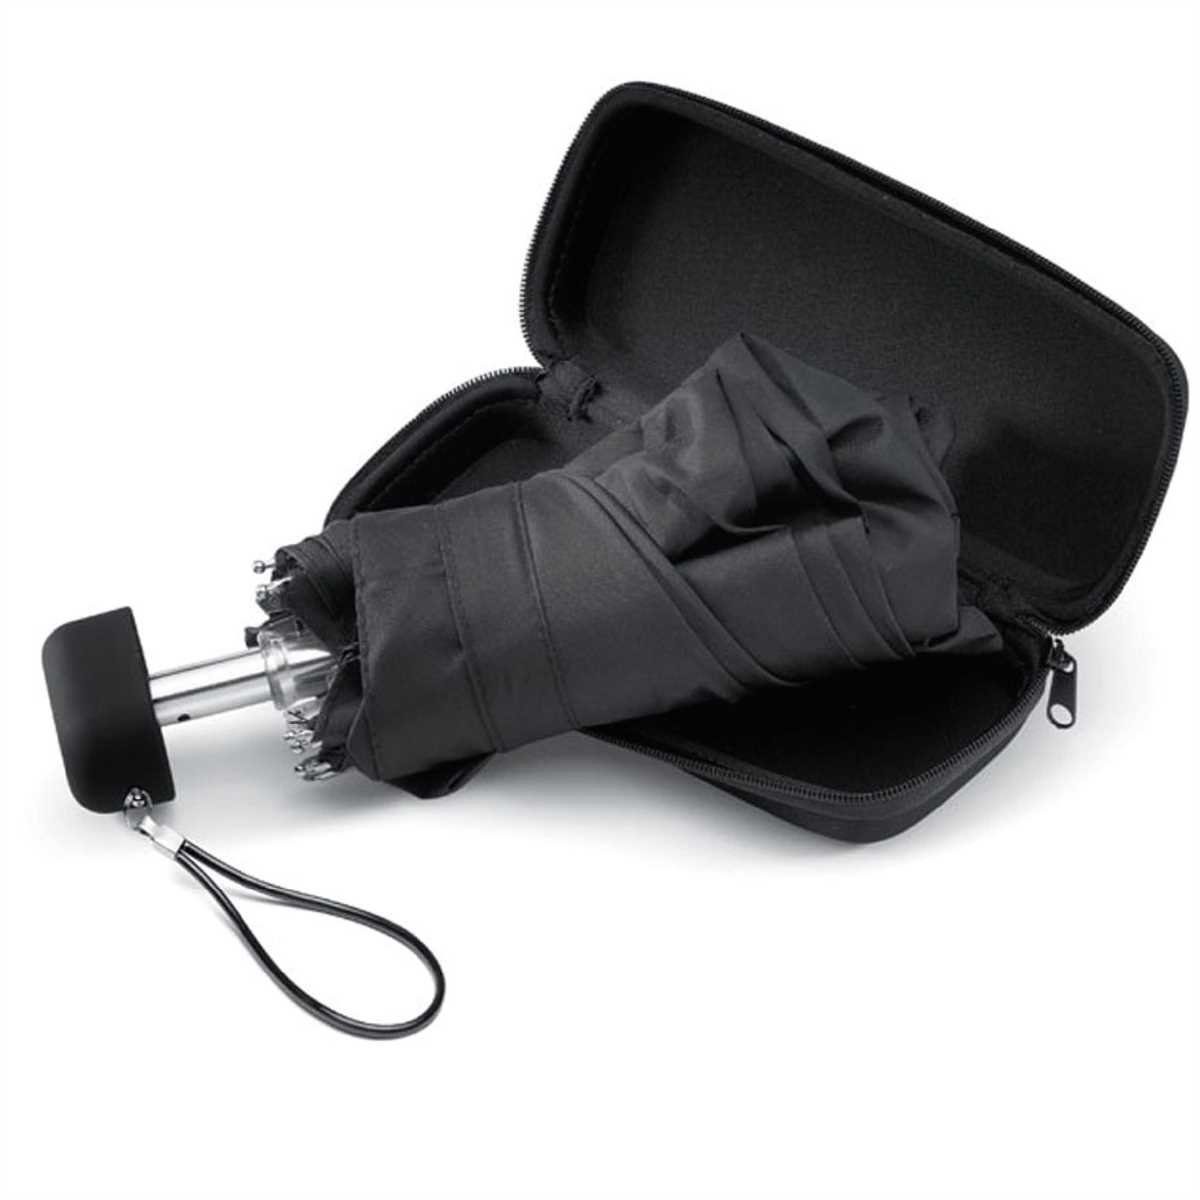 Bestlivings Taschenregenschirm, geschlossen windfest Regenschirm und Mini Taschenregenschirm schnelltrocknend 19cm, ultraleicht, stabil